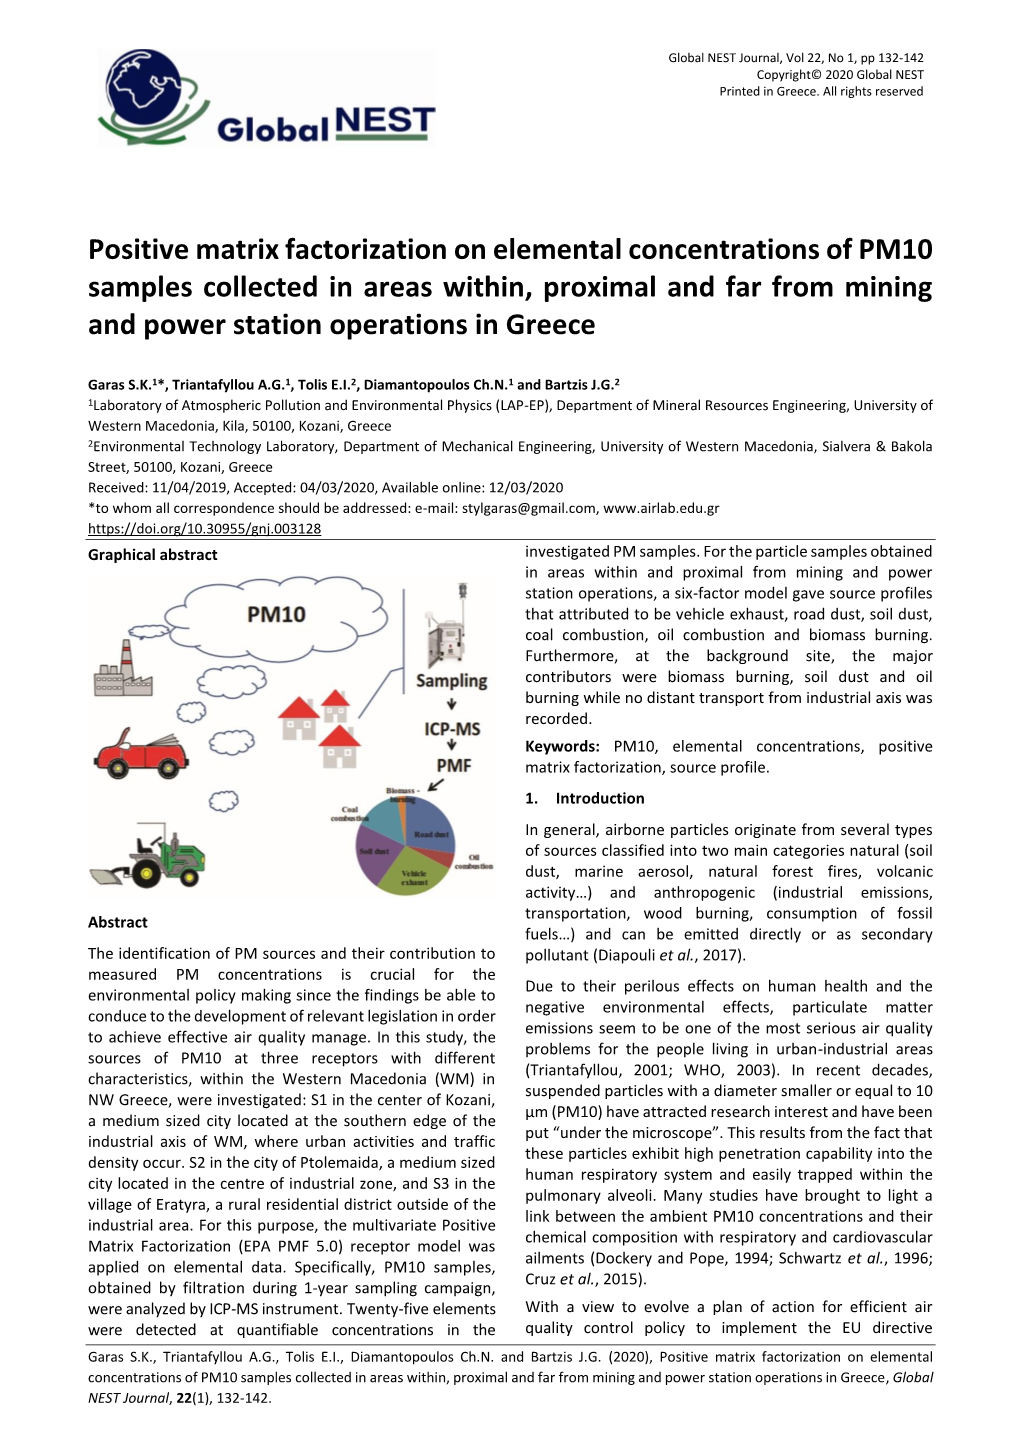 Positive Matrix Factorization on Elemental Concentrations of PM10